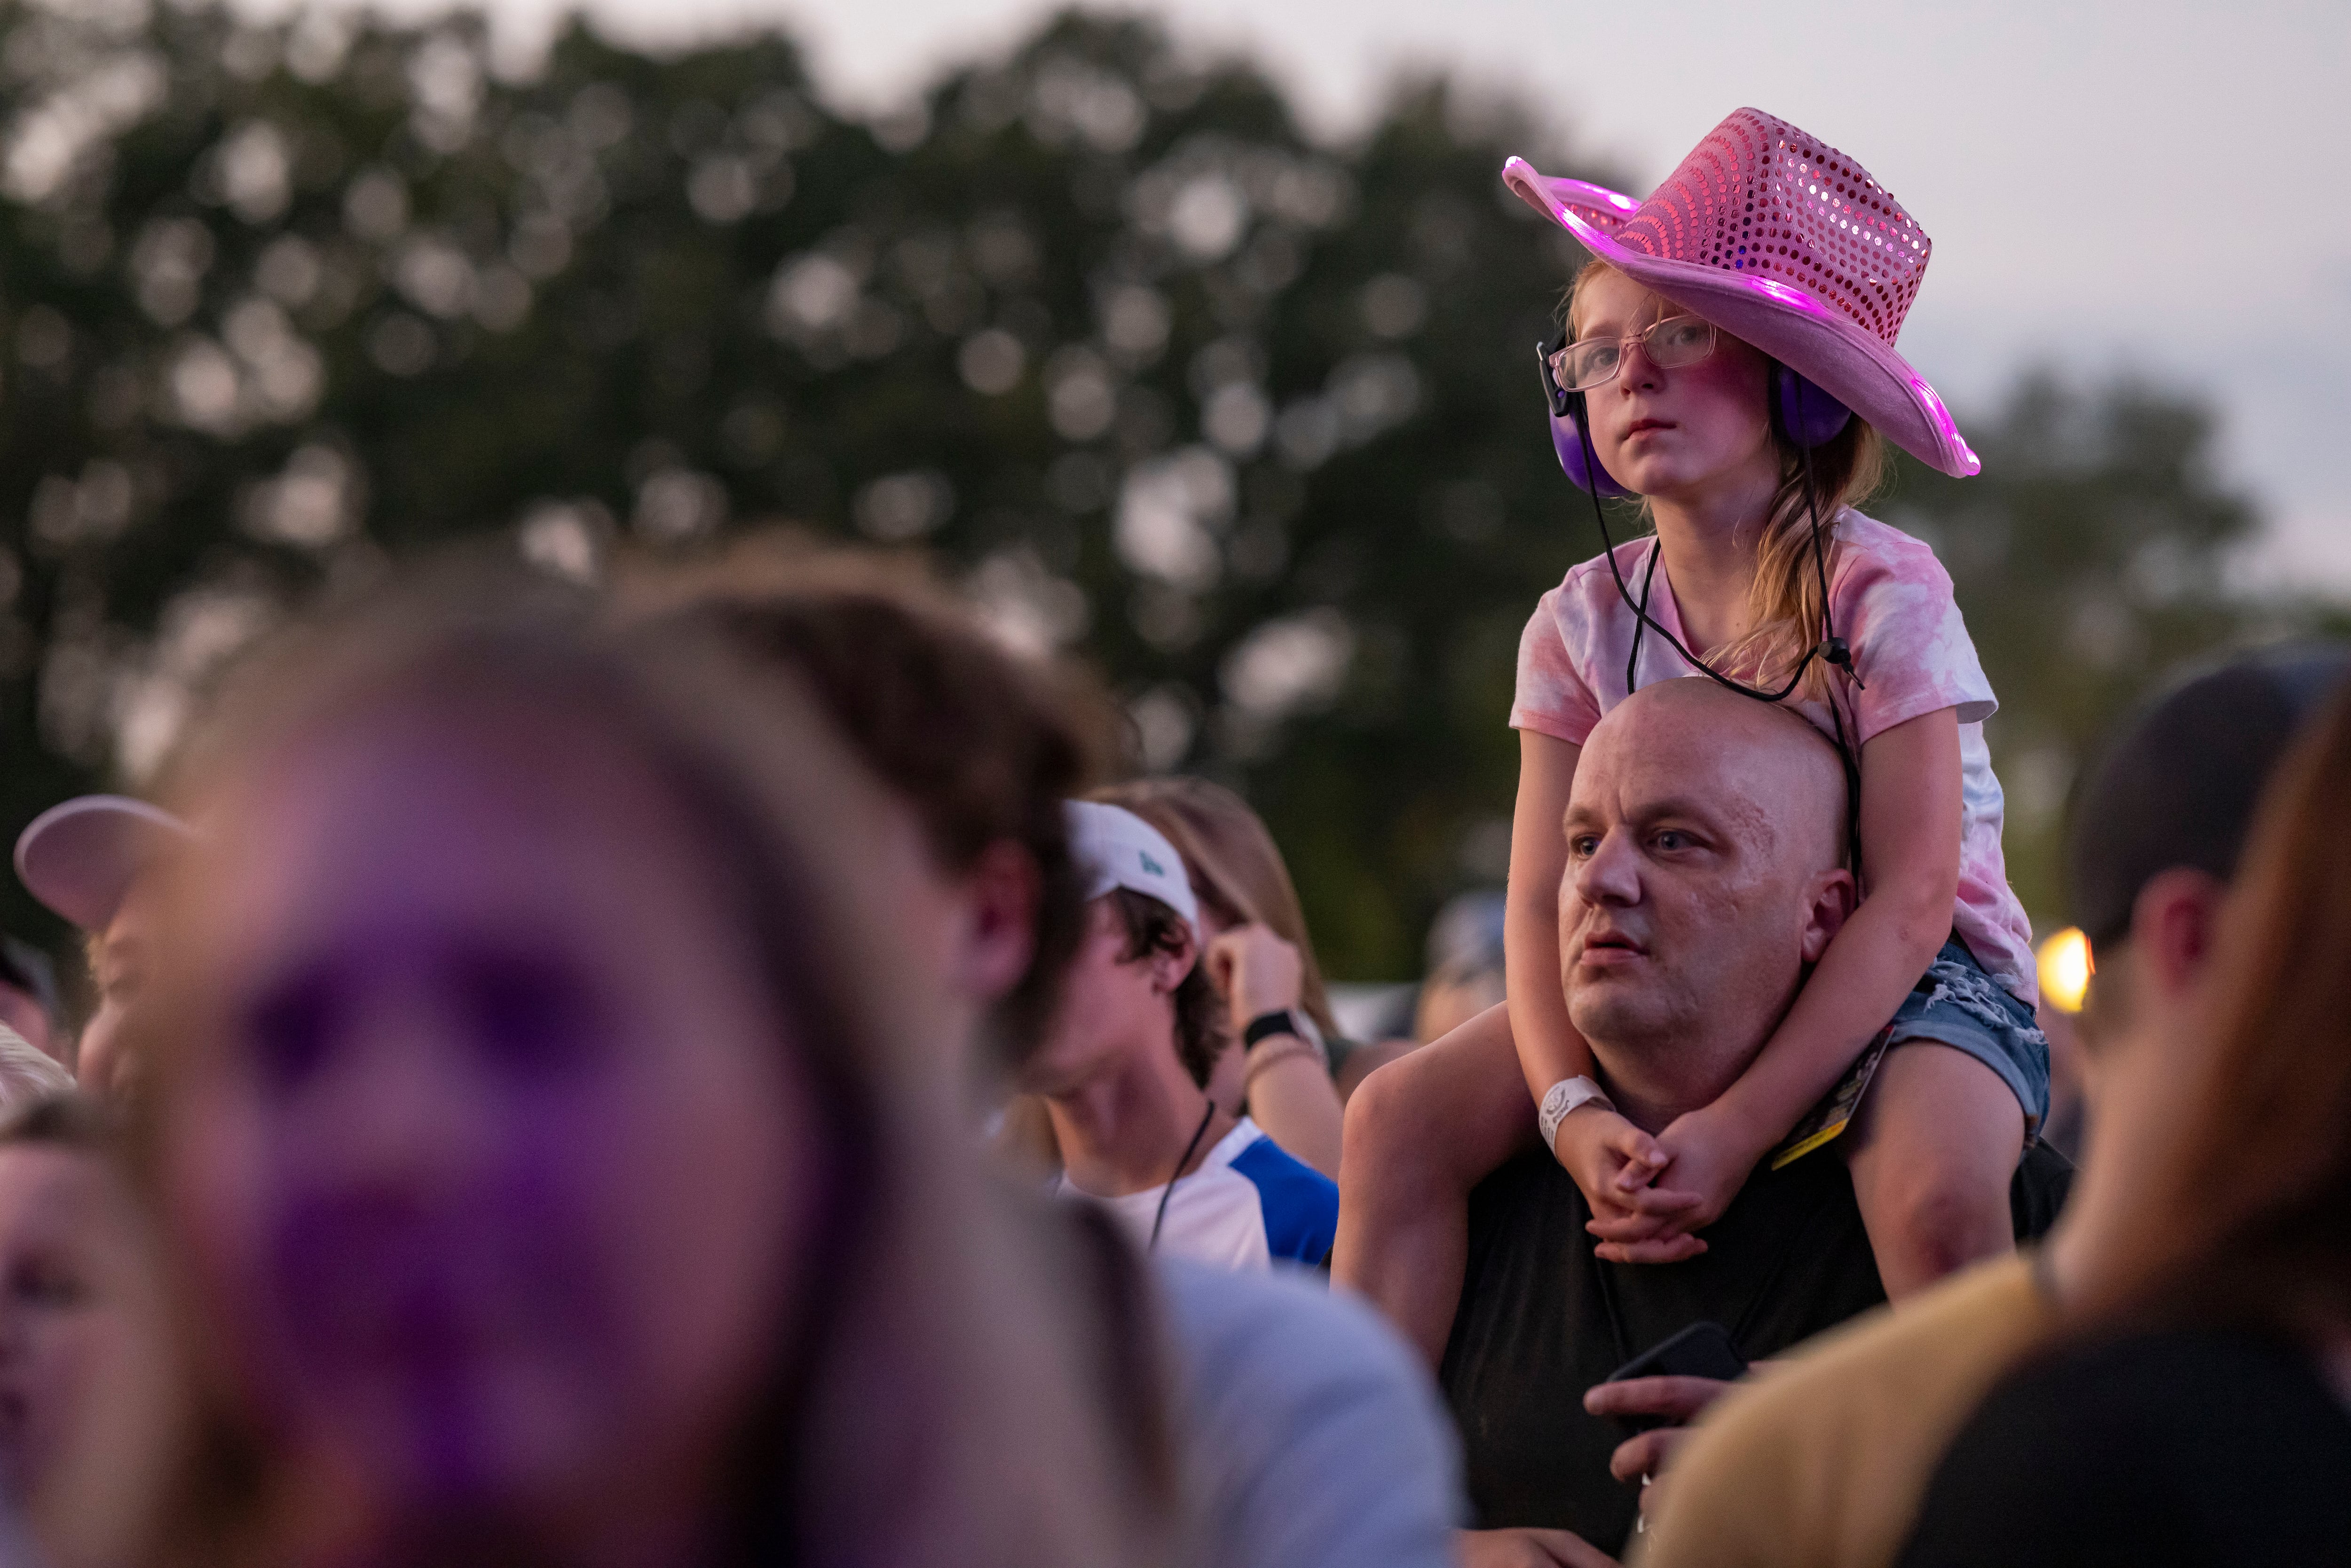 Photos: Families enjoy a night at Streator Fest